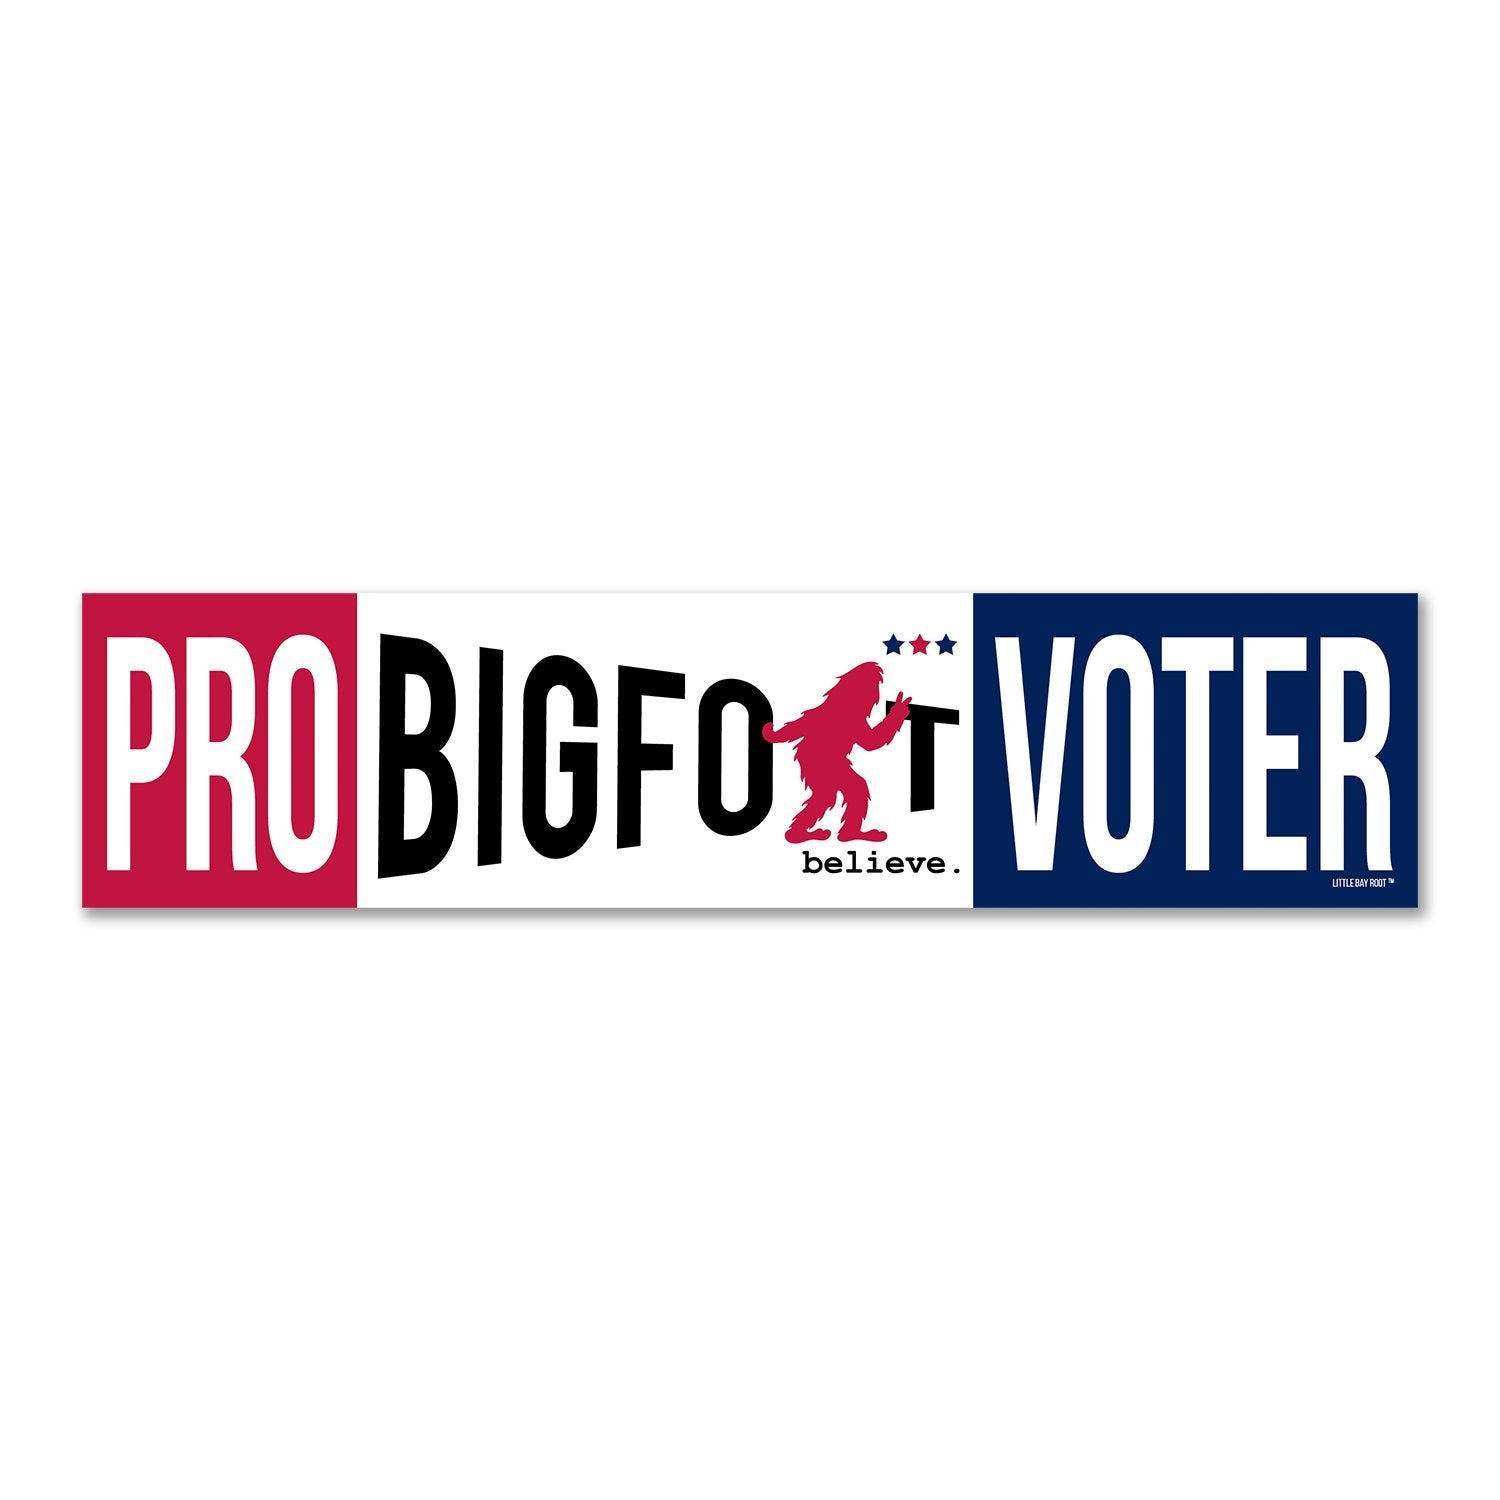 Pro Bigfoor Voter | Sticker